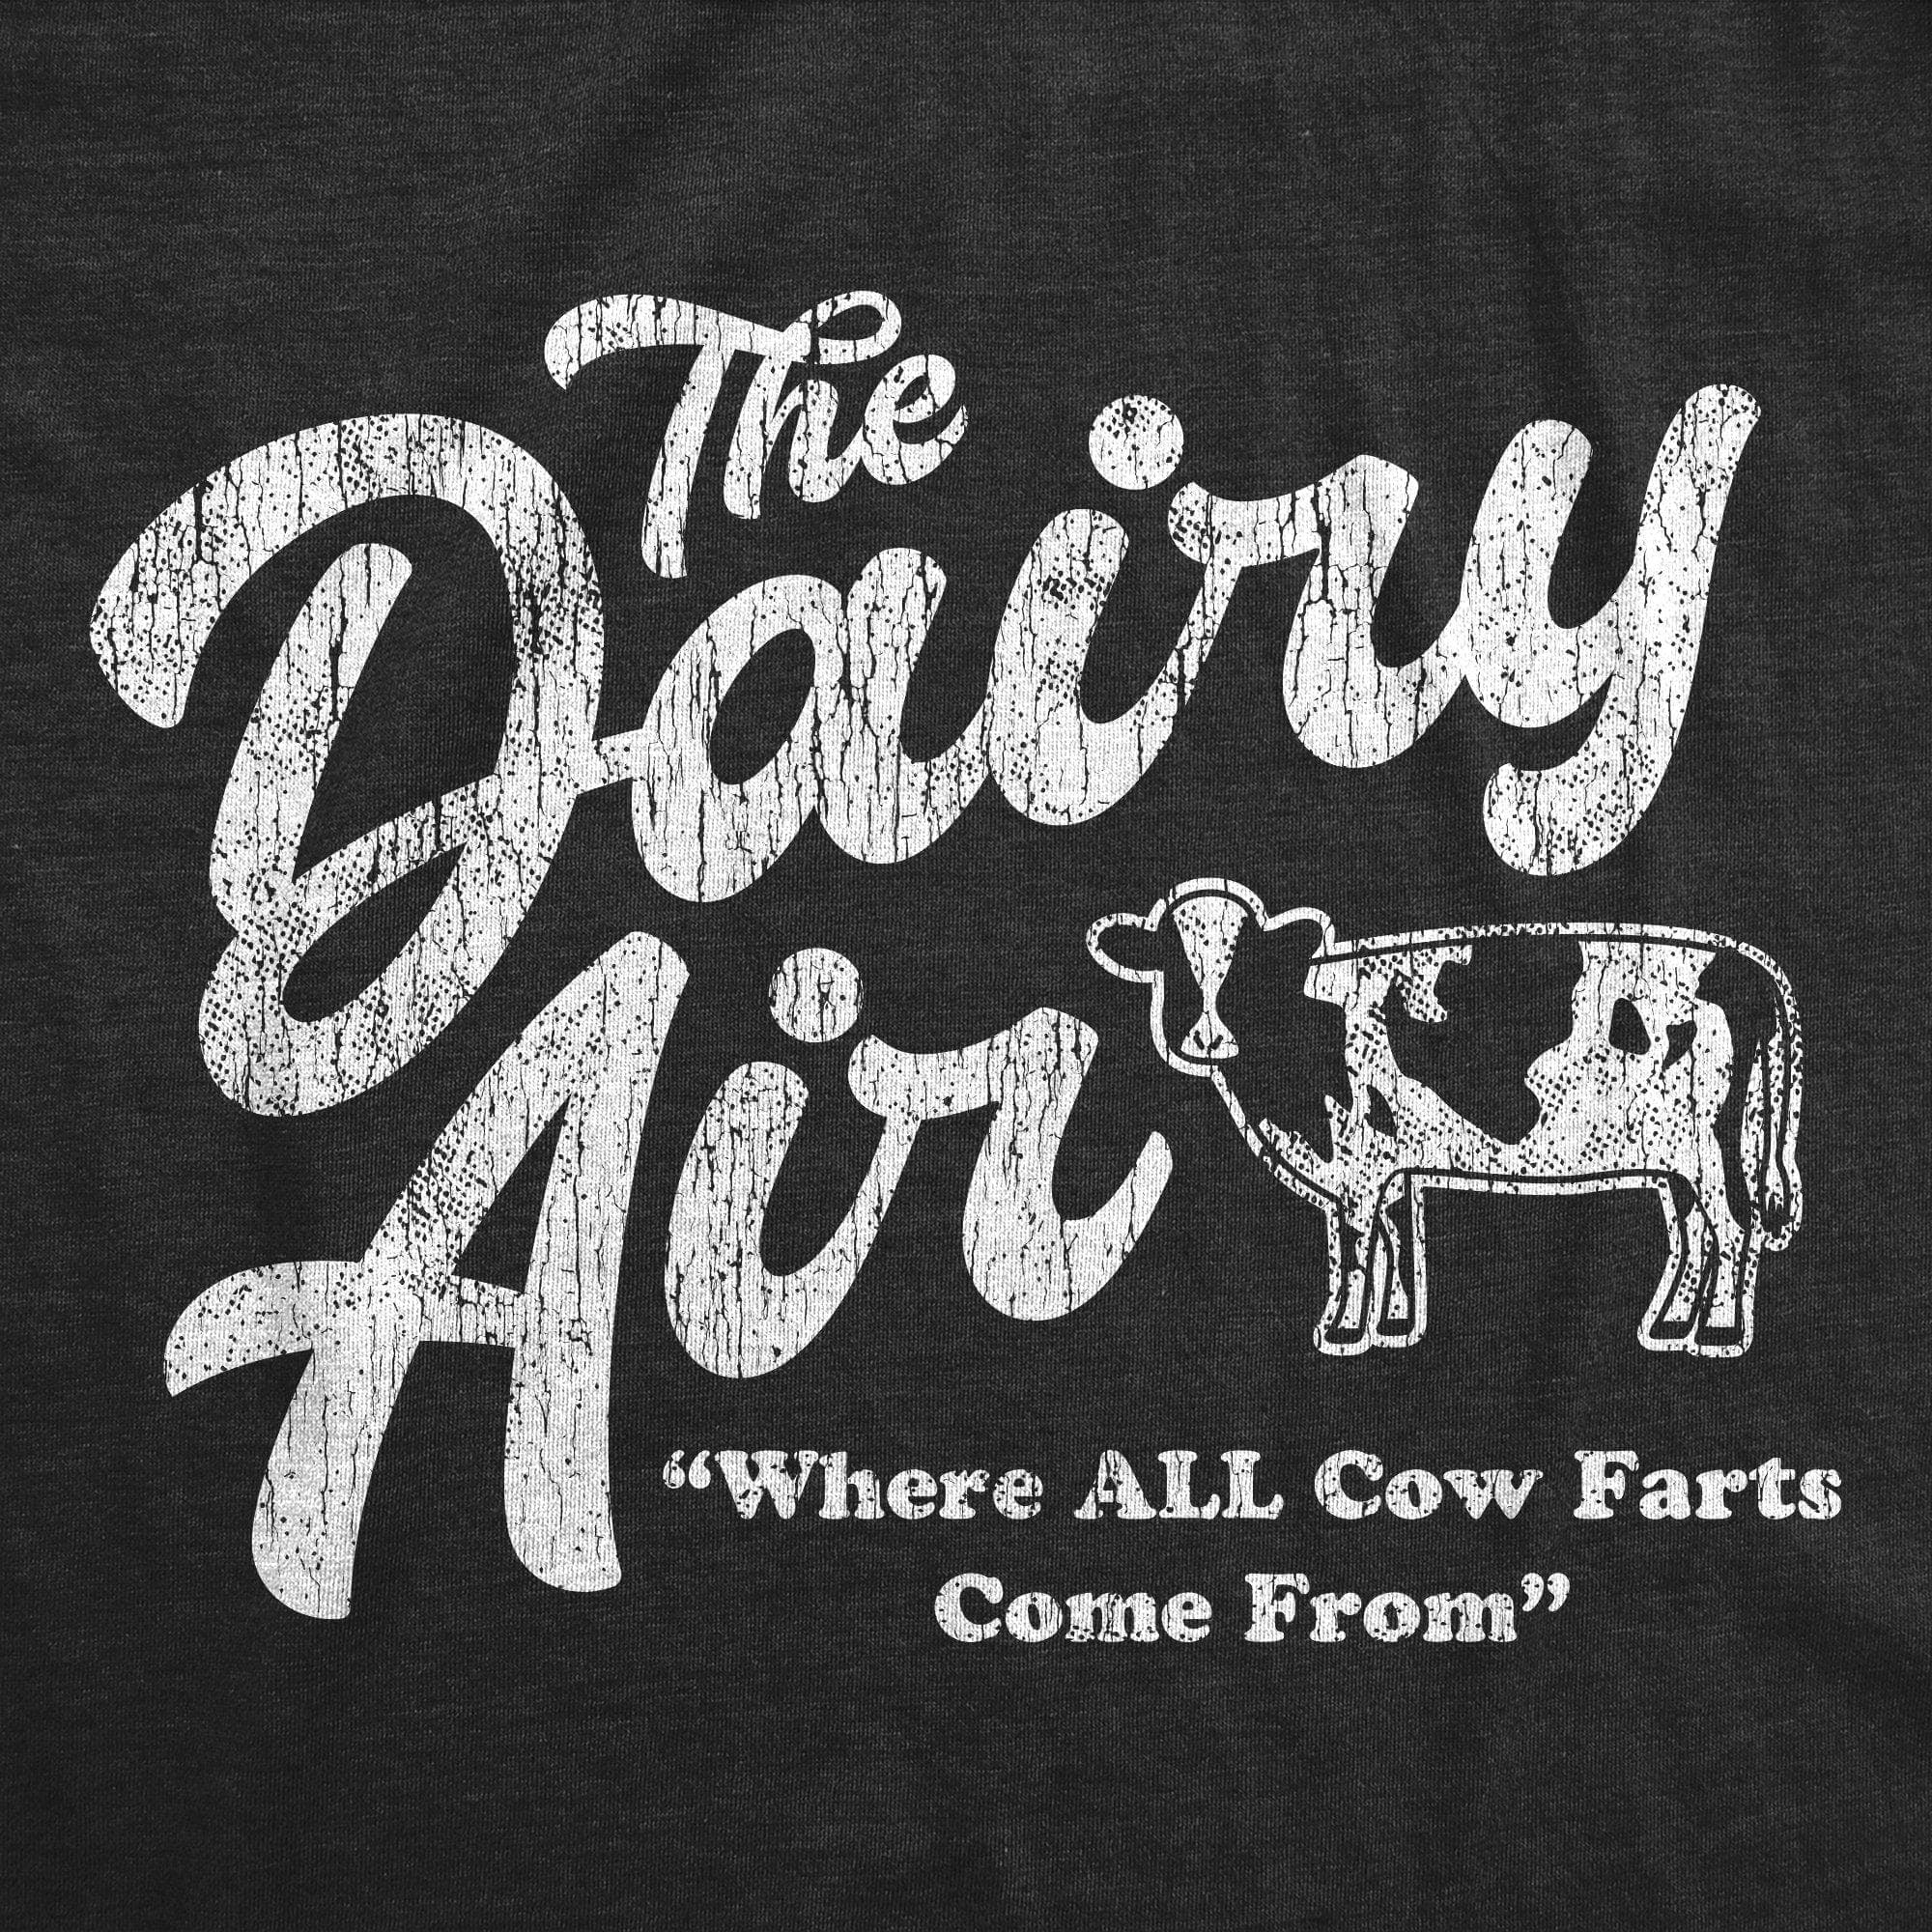 The Dairy Air Women's Tshirt - Crazy Dog T-Shirts